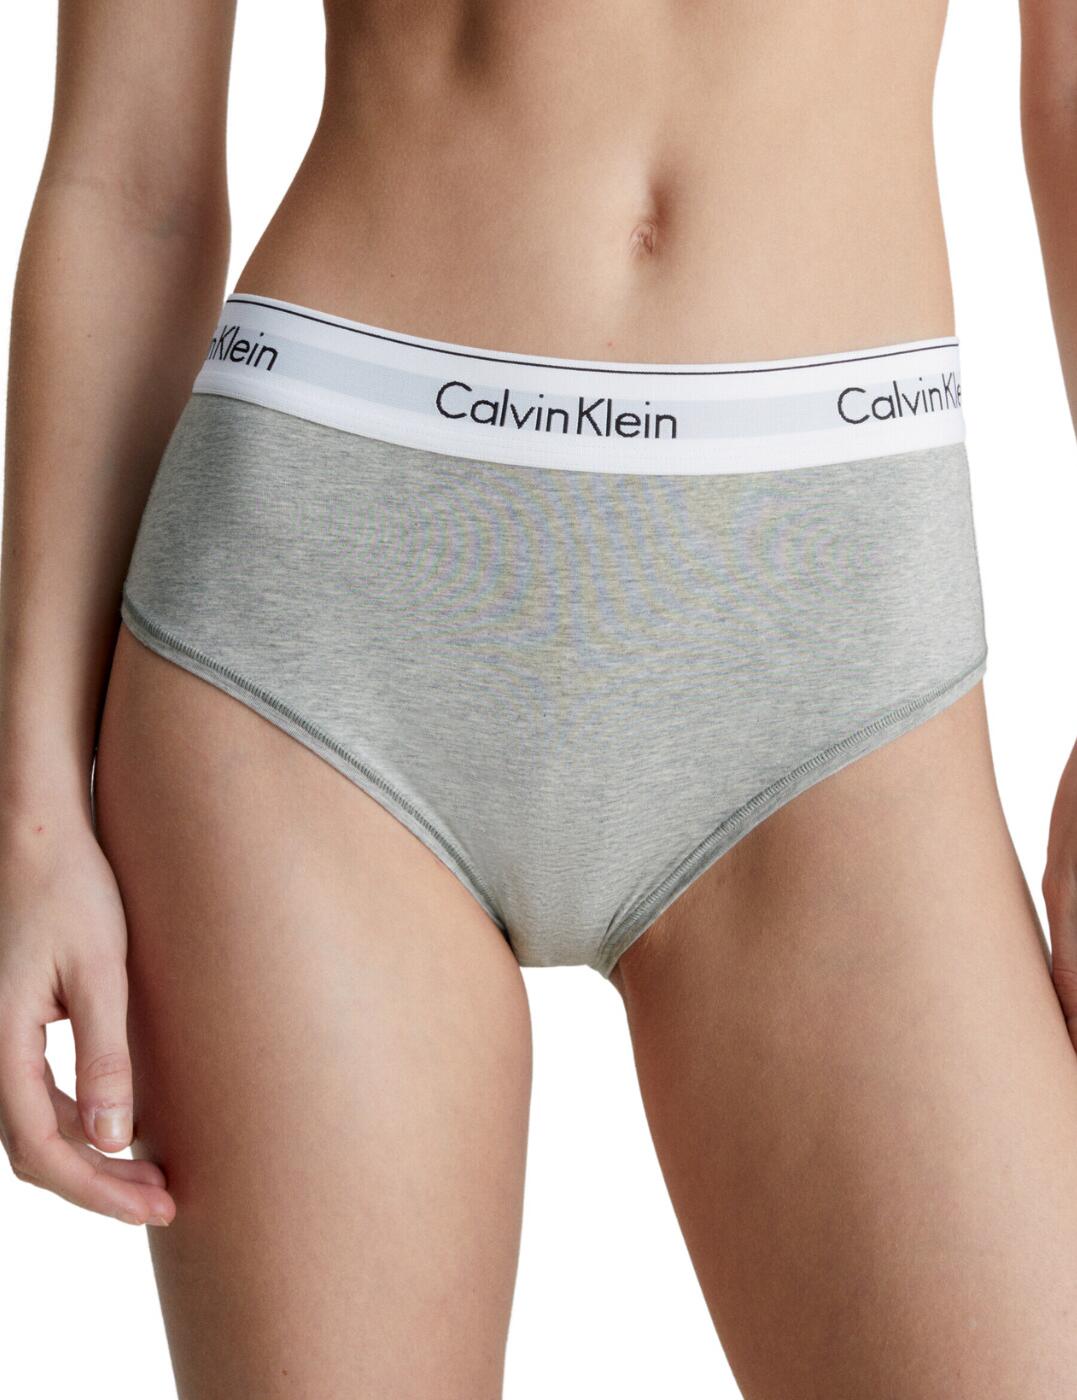 Calvin Klein Women's Modern Cotton Bikini, White, Large 